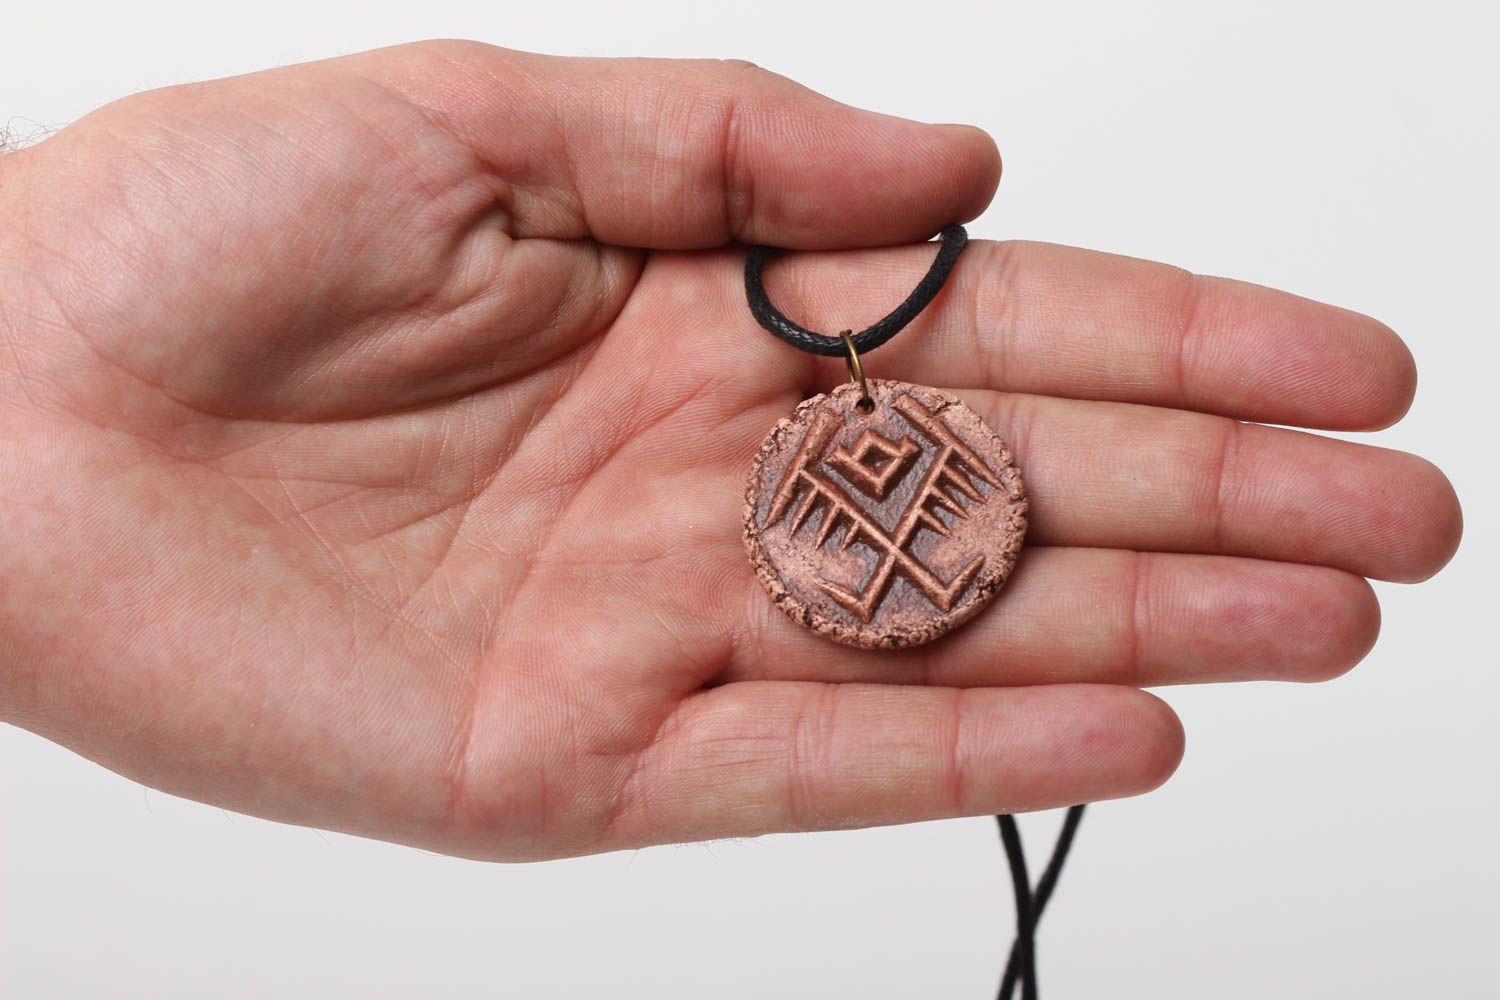 Handmade pendant unusual pendant clay pendant for women gift ideas unusual gift photo 5